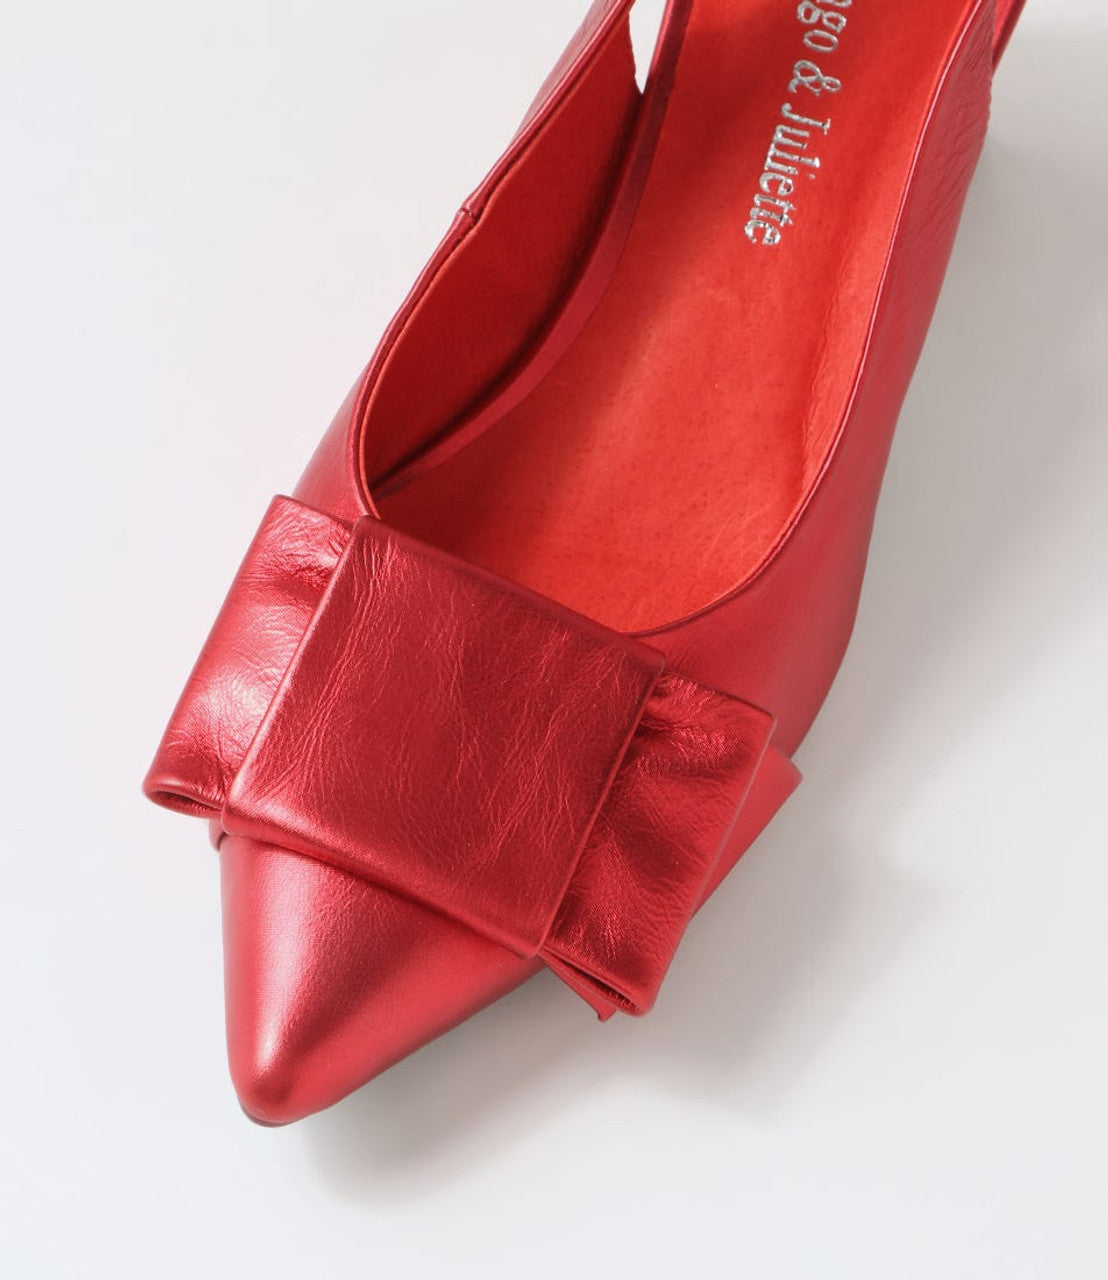 ITZEL SLING BACK - DJANGO AND JULIETTE - 36, 37, 38, 39, 40, 41, 42, black satin, red satin, womens footwear - Stomp Shoes Darwin